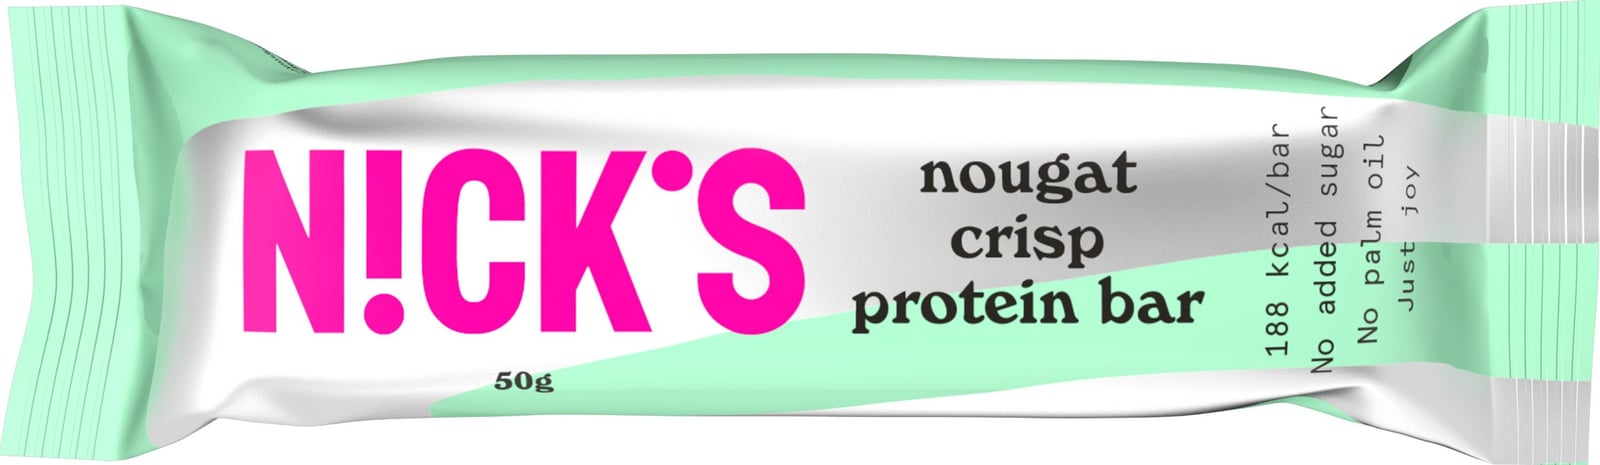 Nick's Protein Bar Nougat Crisp 50g